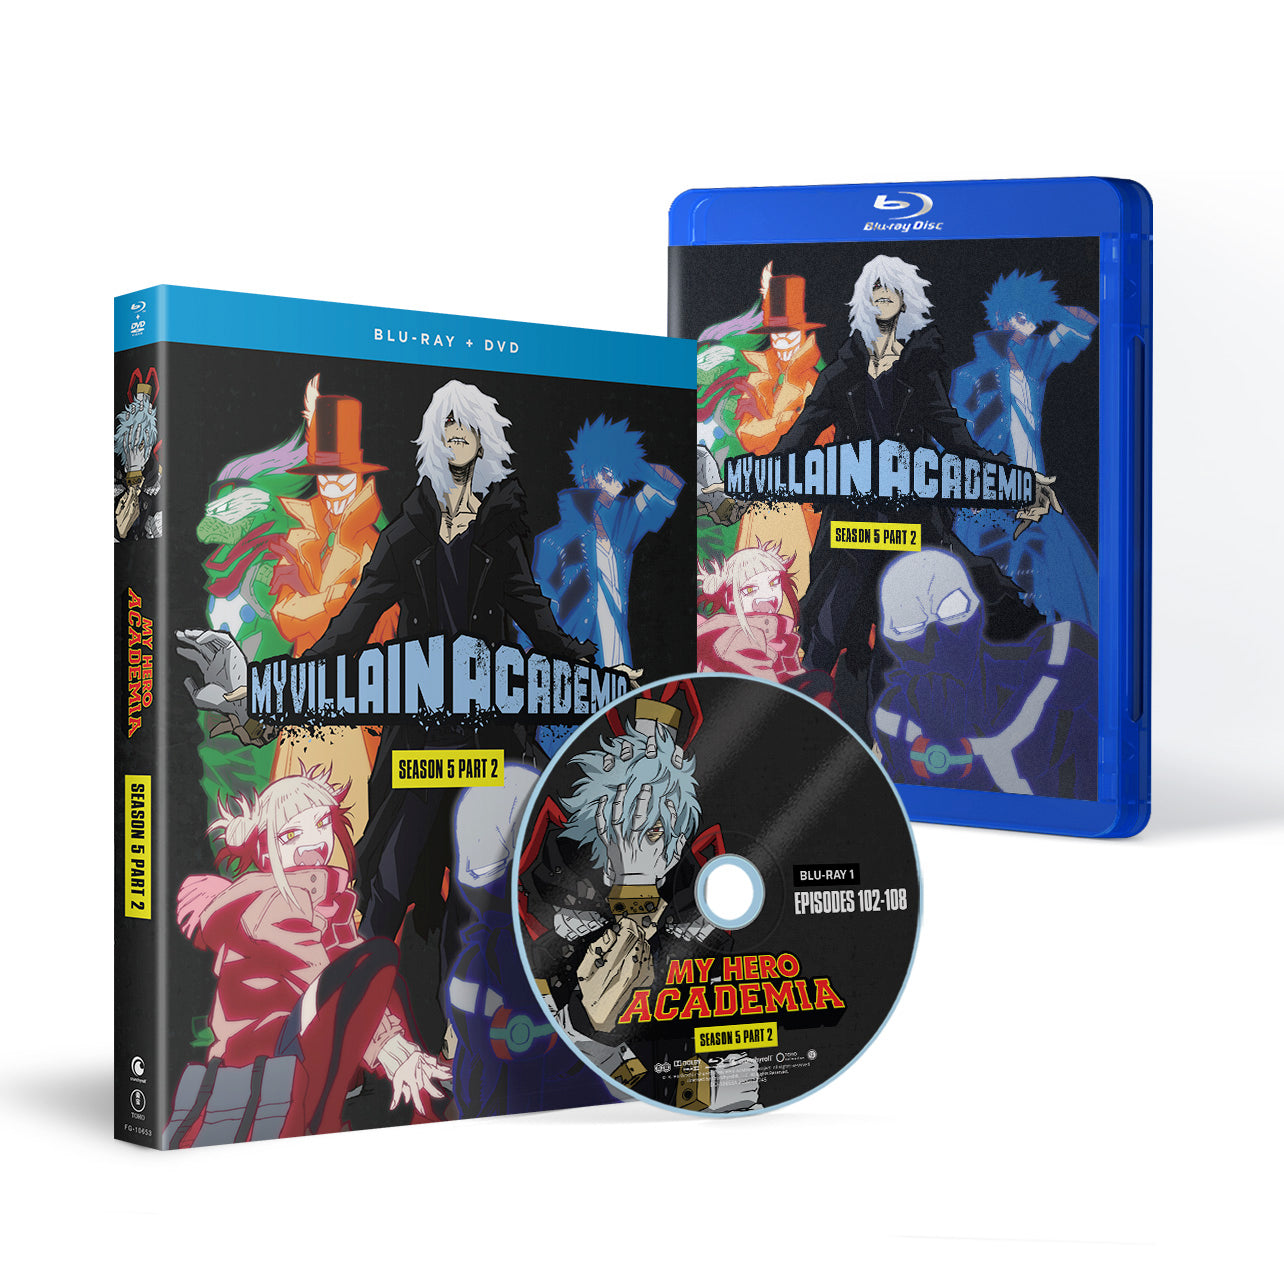 My Hero Academia - Season 5 Part 2 - Blu-ray + DVD | Crunchyroll store